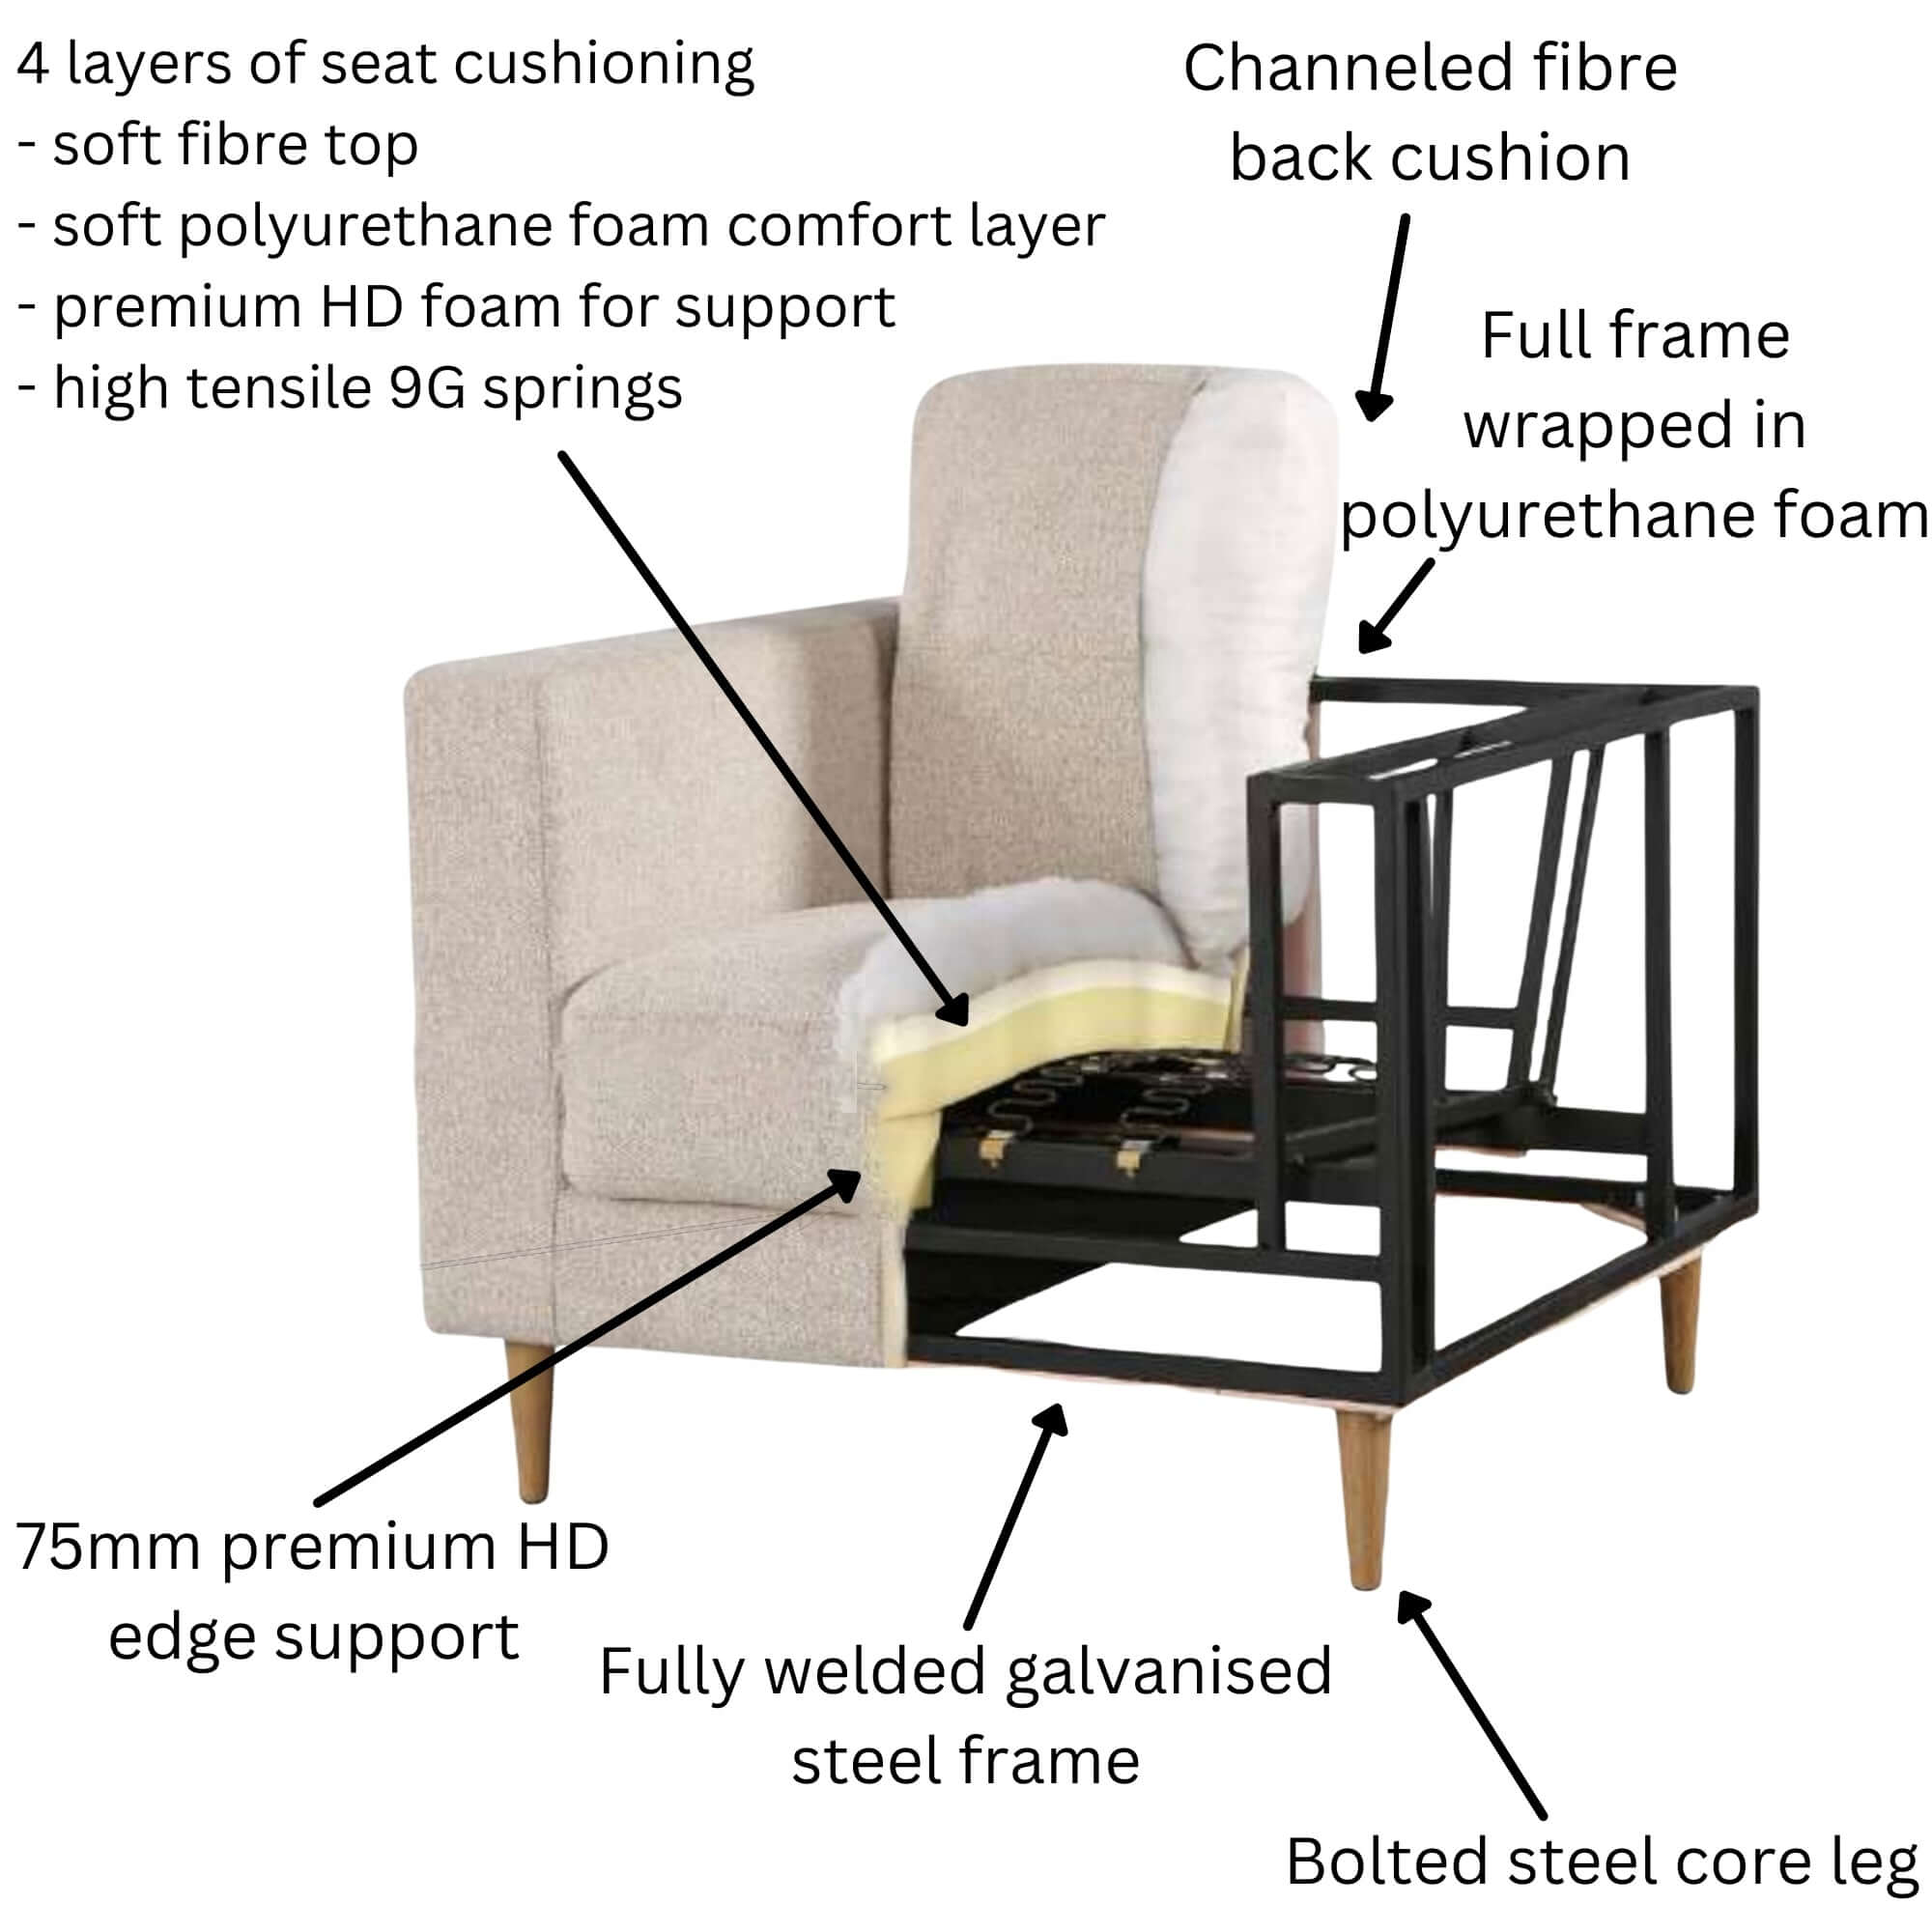 Jolie XL 3-Seater Sofa in Quartz - French Style Comfort-Upinteriors